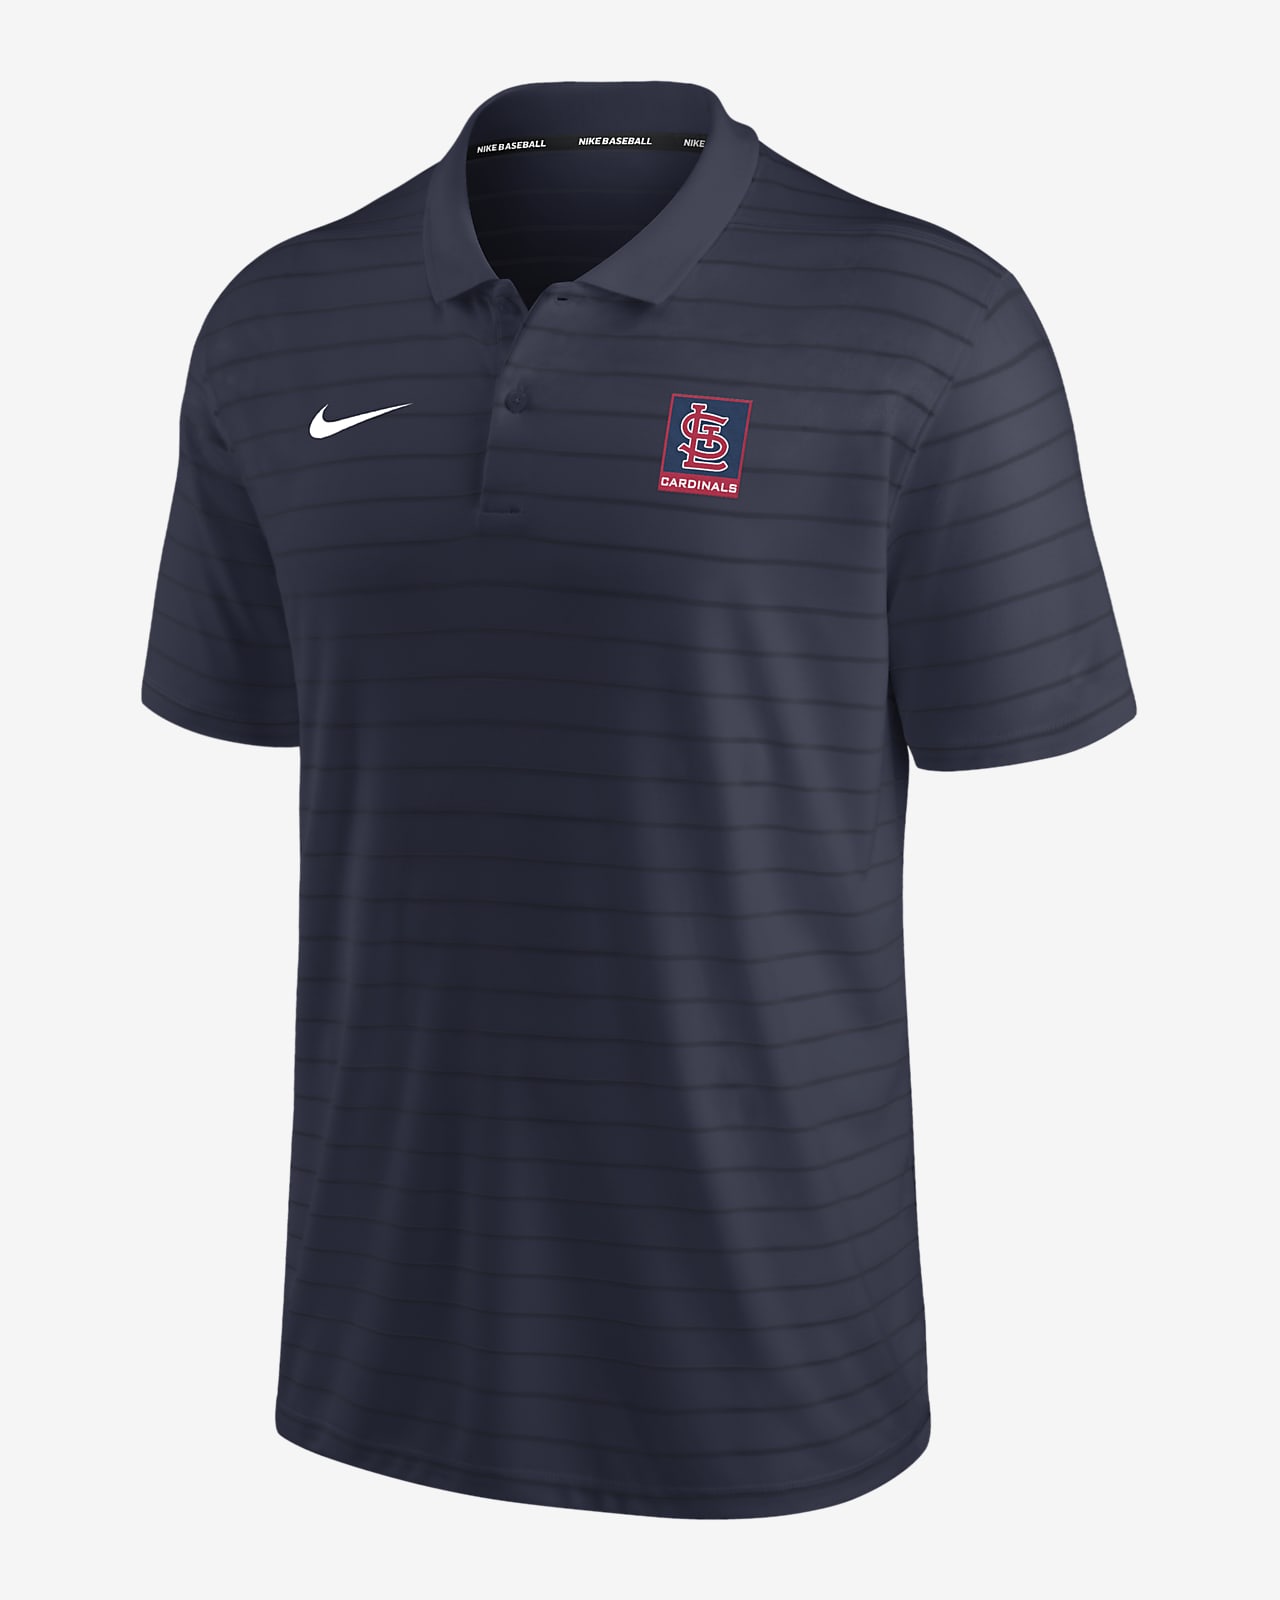 Nike Dri-FIT Striped (MLB St. Louis Cardinals) Men's Polo.